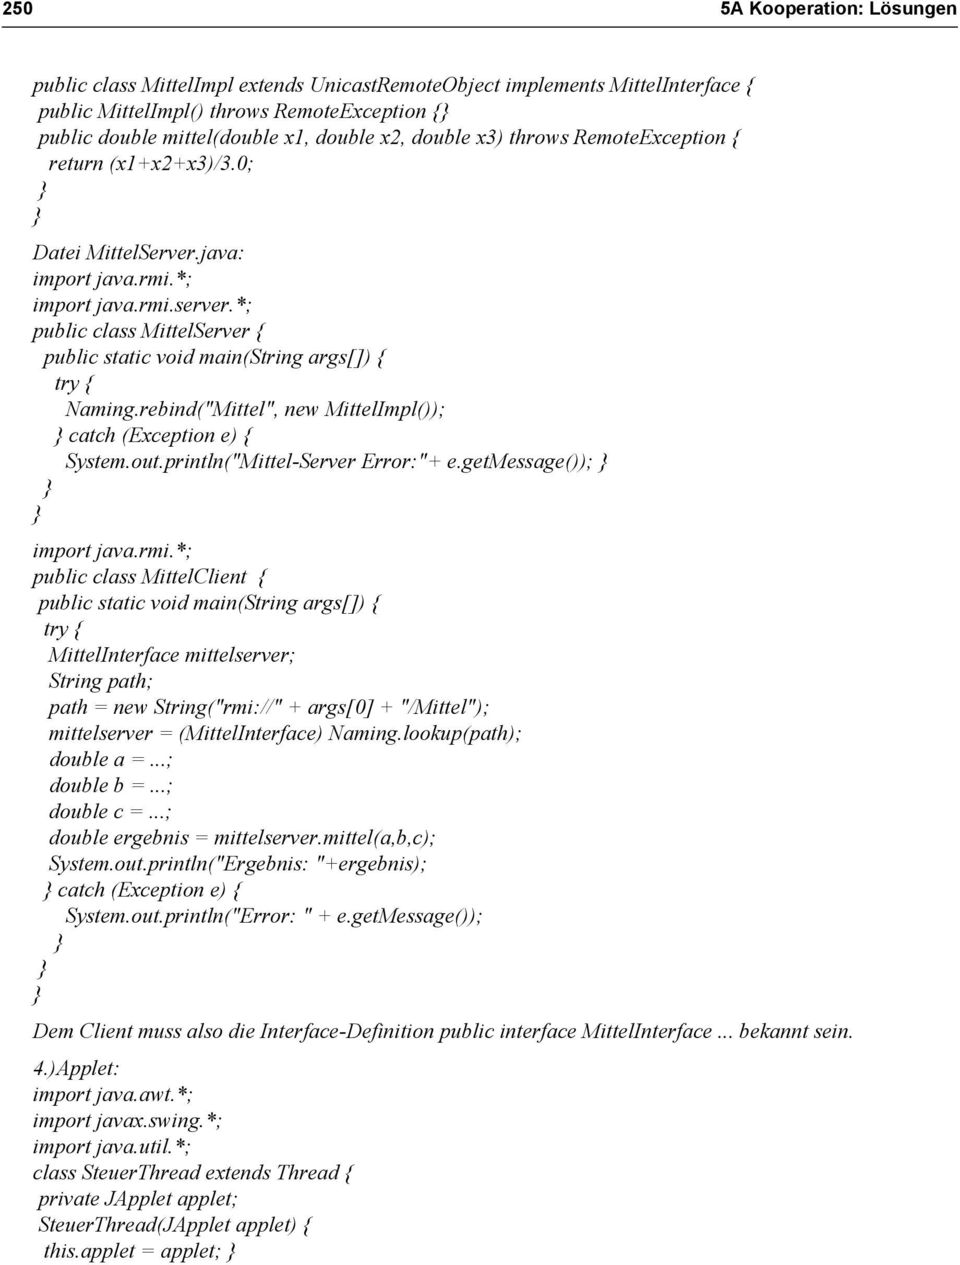 rebind("Mittel", new MittelImpl()); catch (Exception e) { System.out.println("Mittel-Server Error:"+ e.